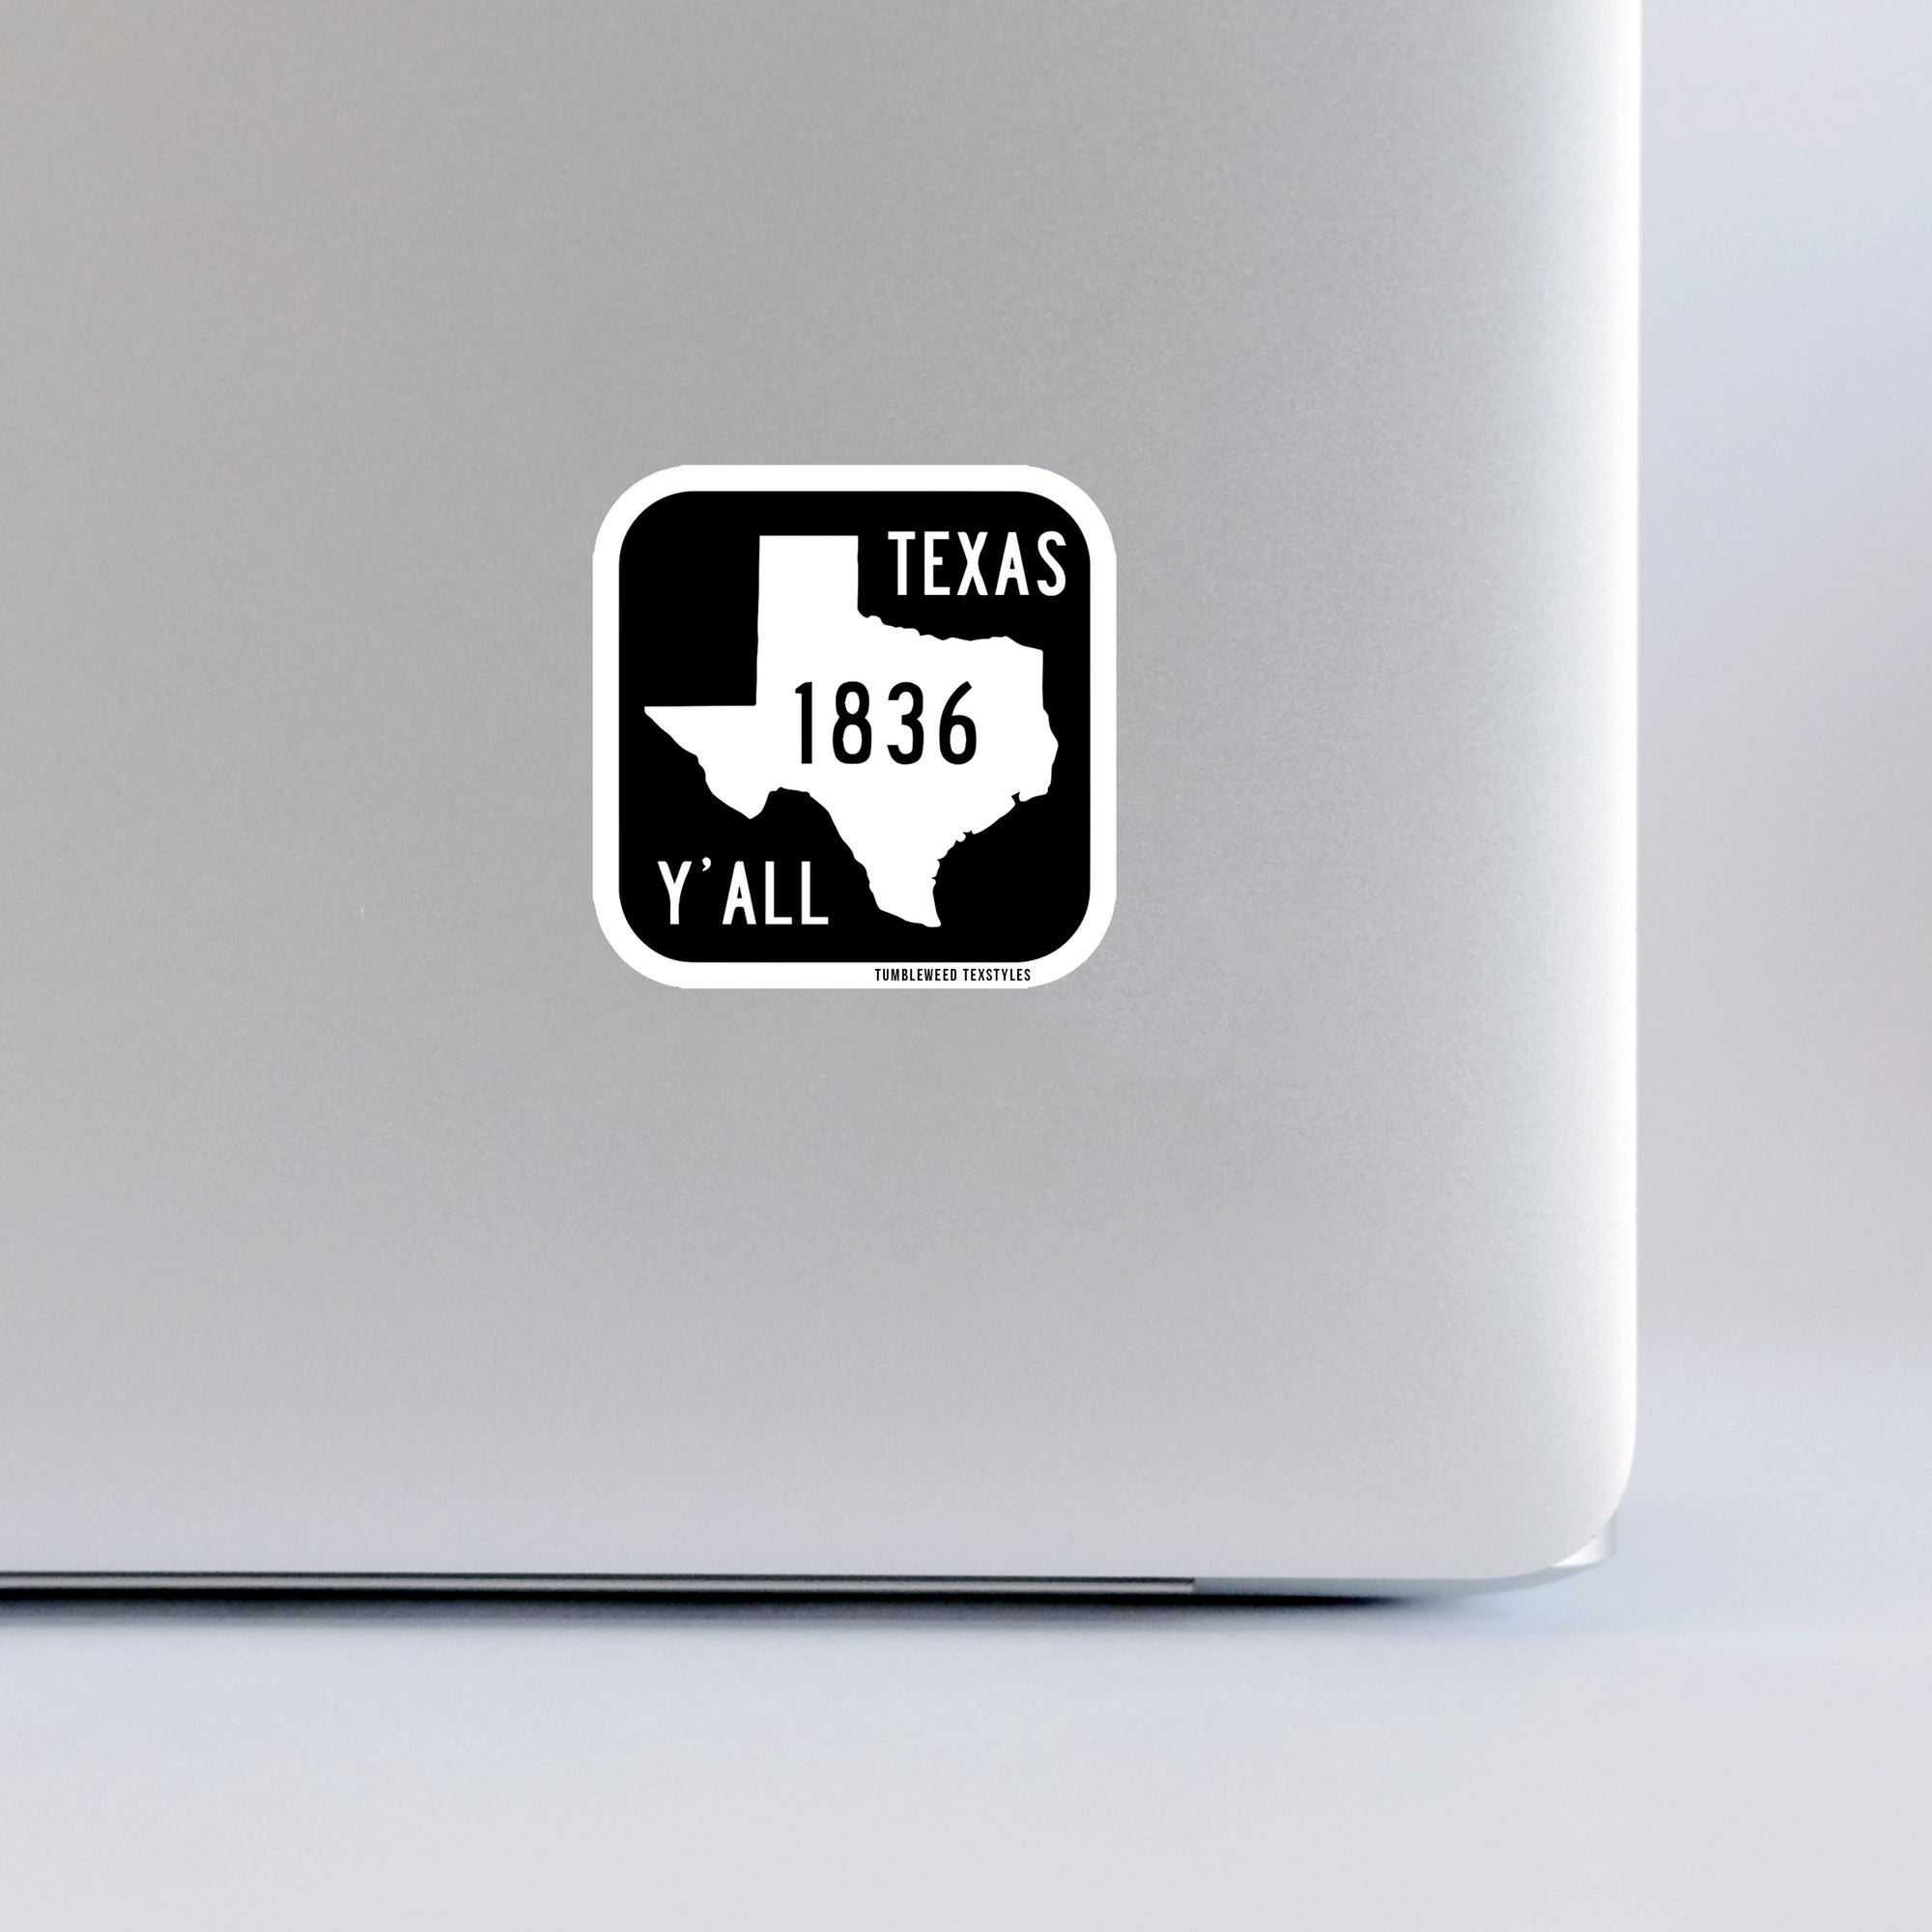 Texas Y'all Road Sign Sticker